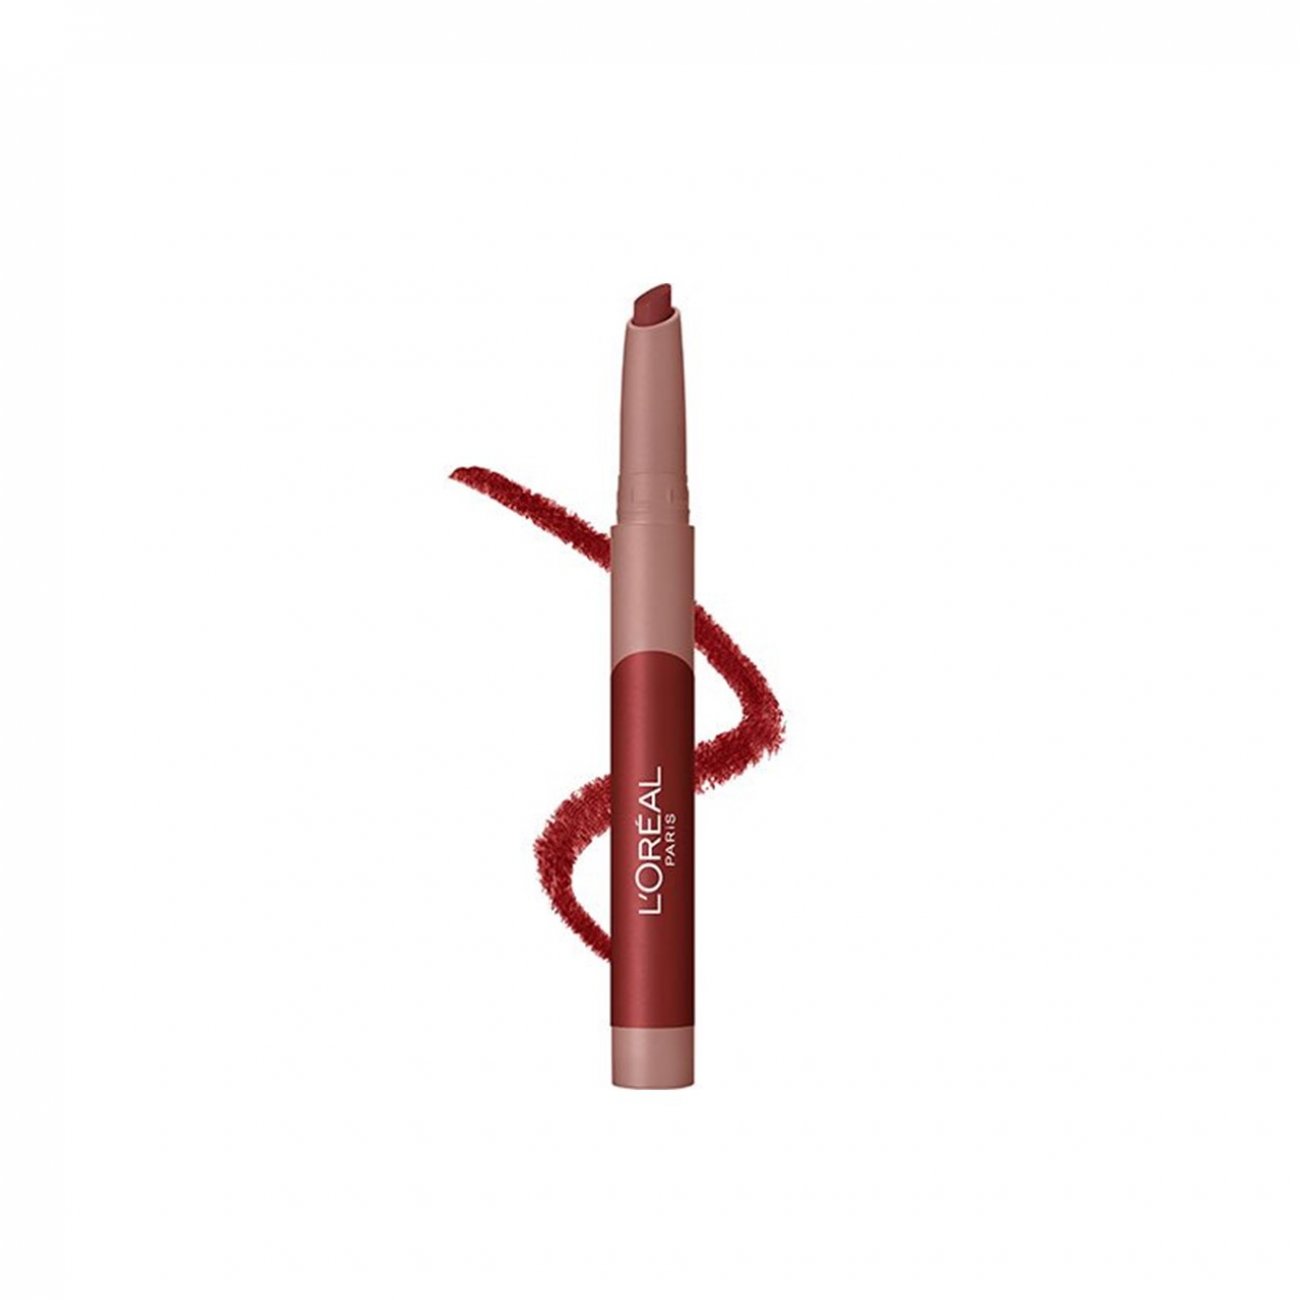 uitspraak Afkorten Vuil Kopen L'Oréal Paris Infallible Very Matte Lip Crayon · Nederland